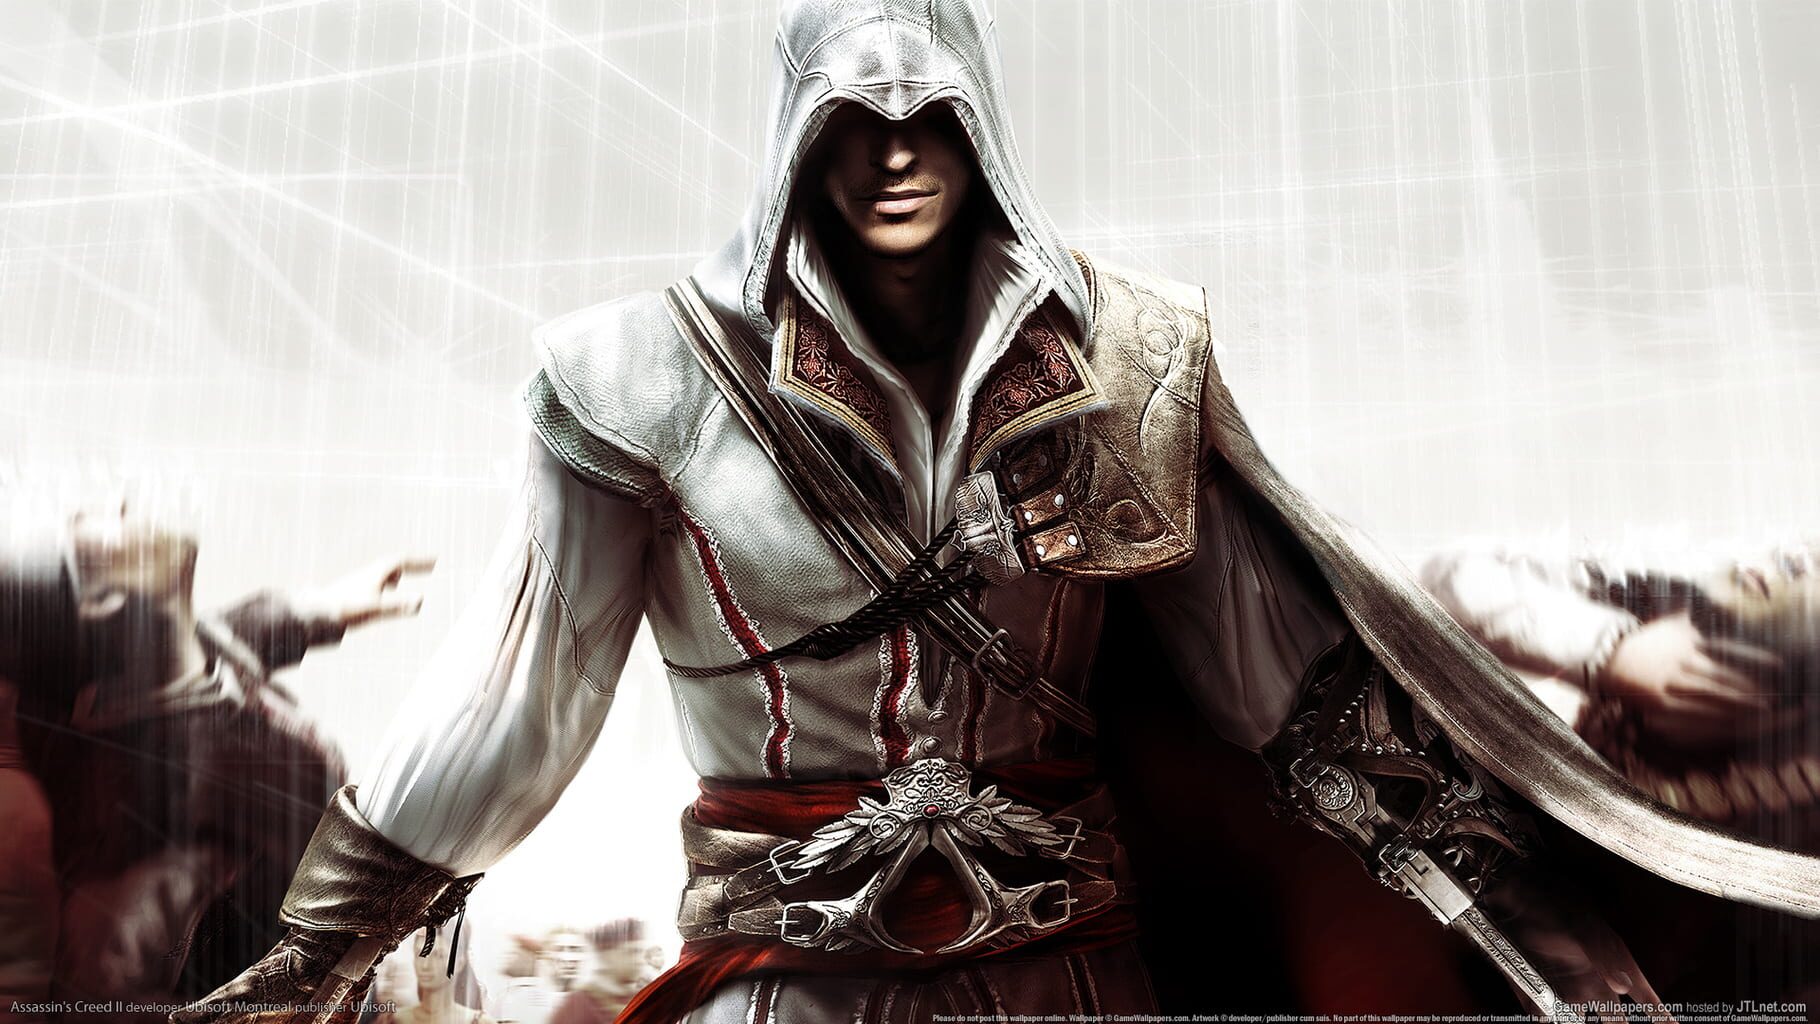 Assassin's Creed II Image